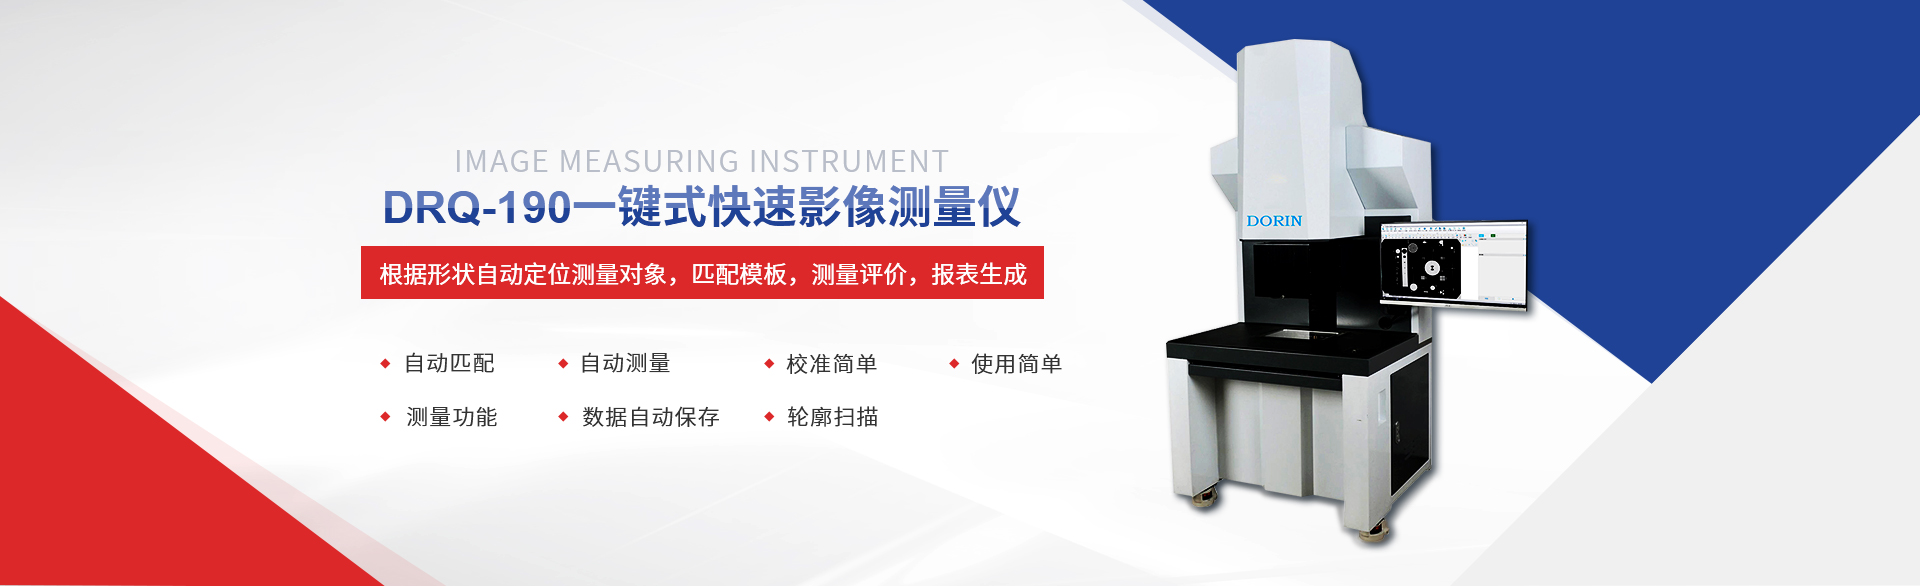  DRQ-190 series one key measuring instrument